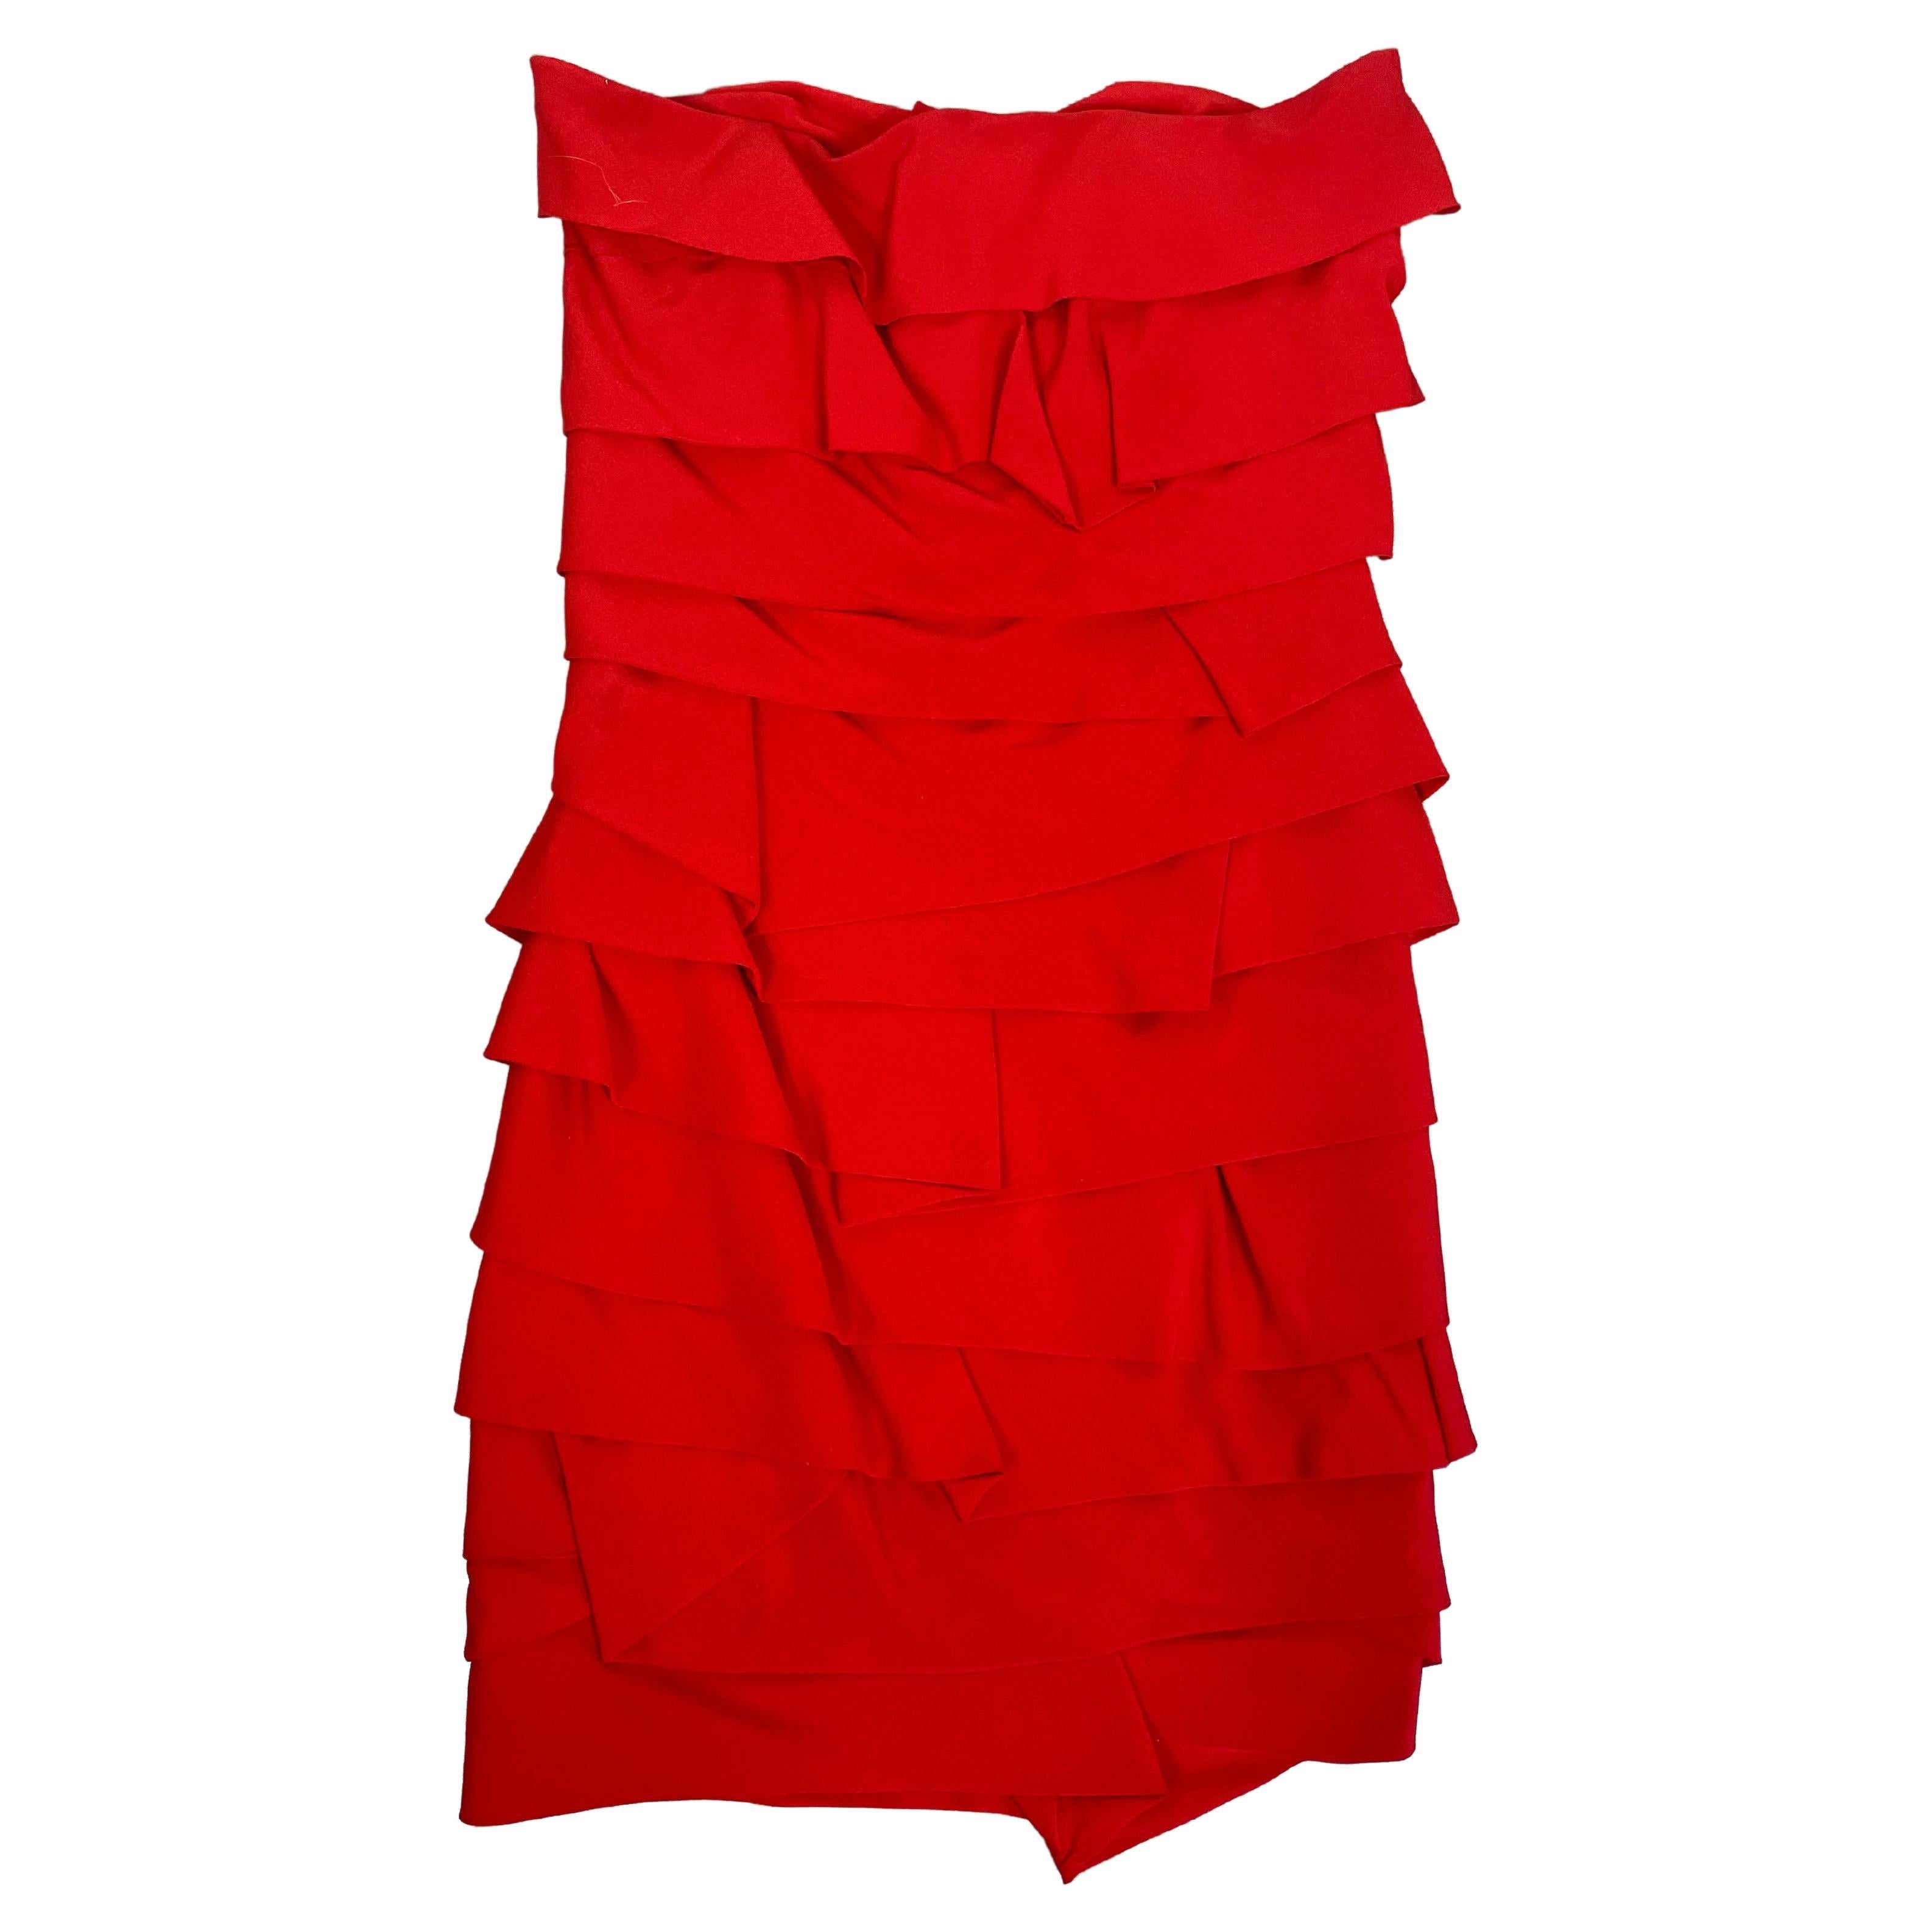 Gianni Versace Sera 1987-88 red dress